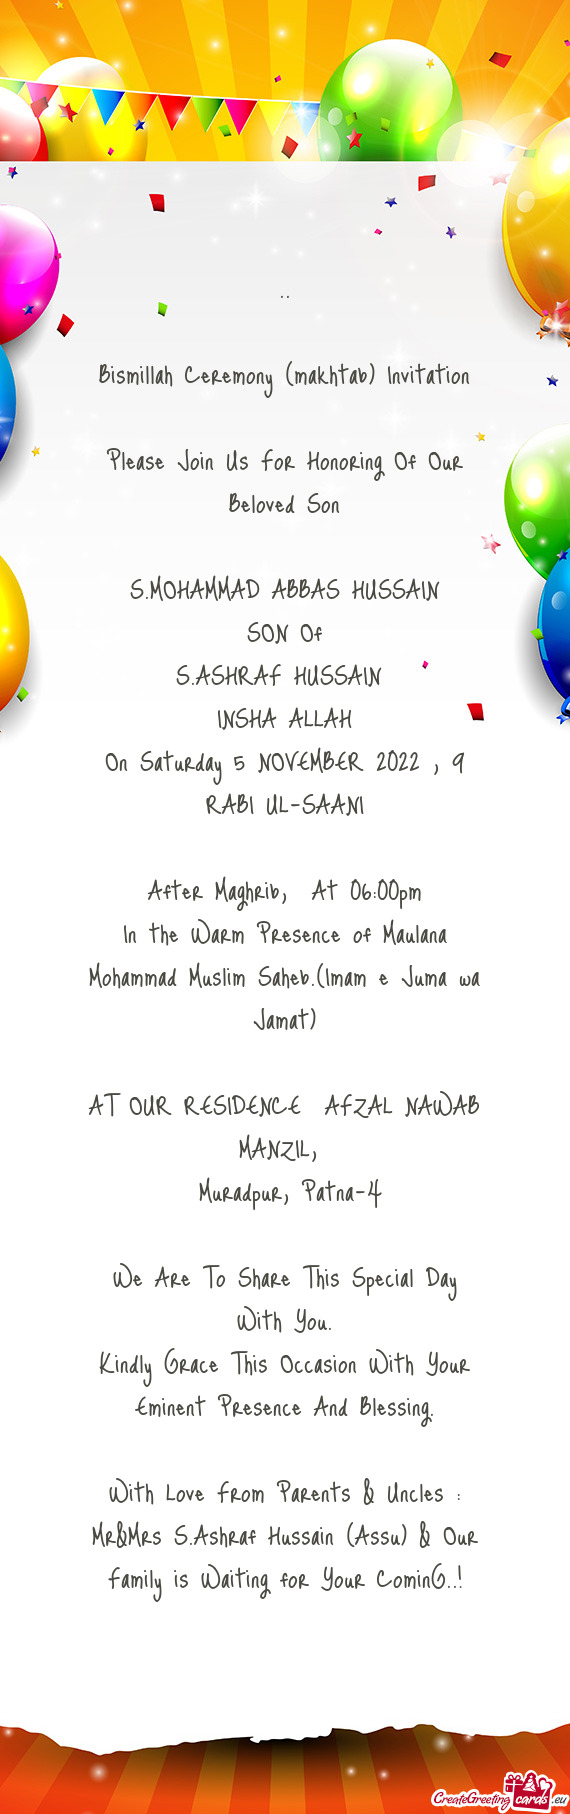 On Saturday 5 NOVEMBER 2022 , 9 RABI UL-SAANI